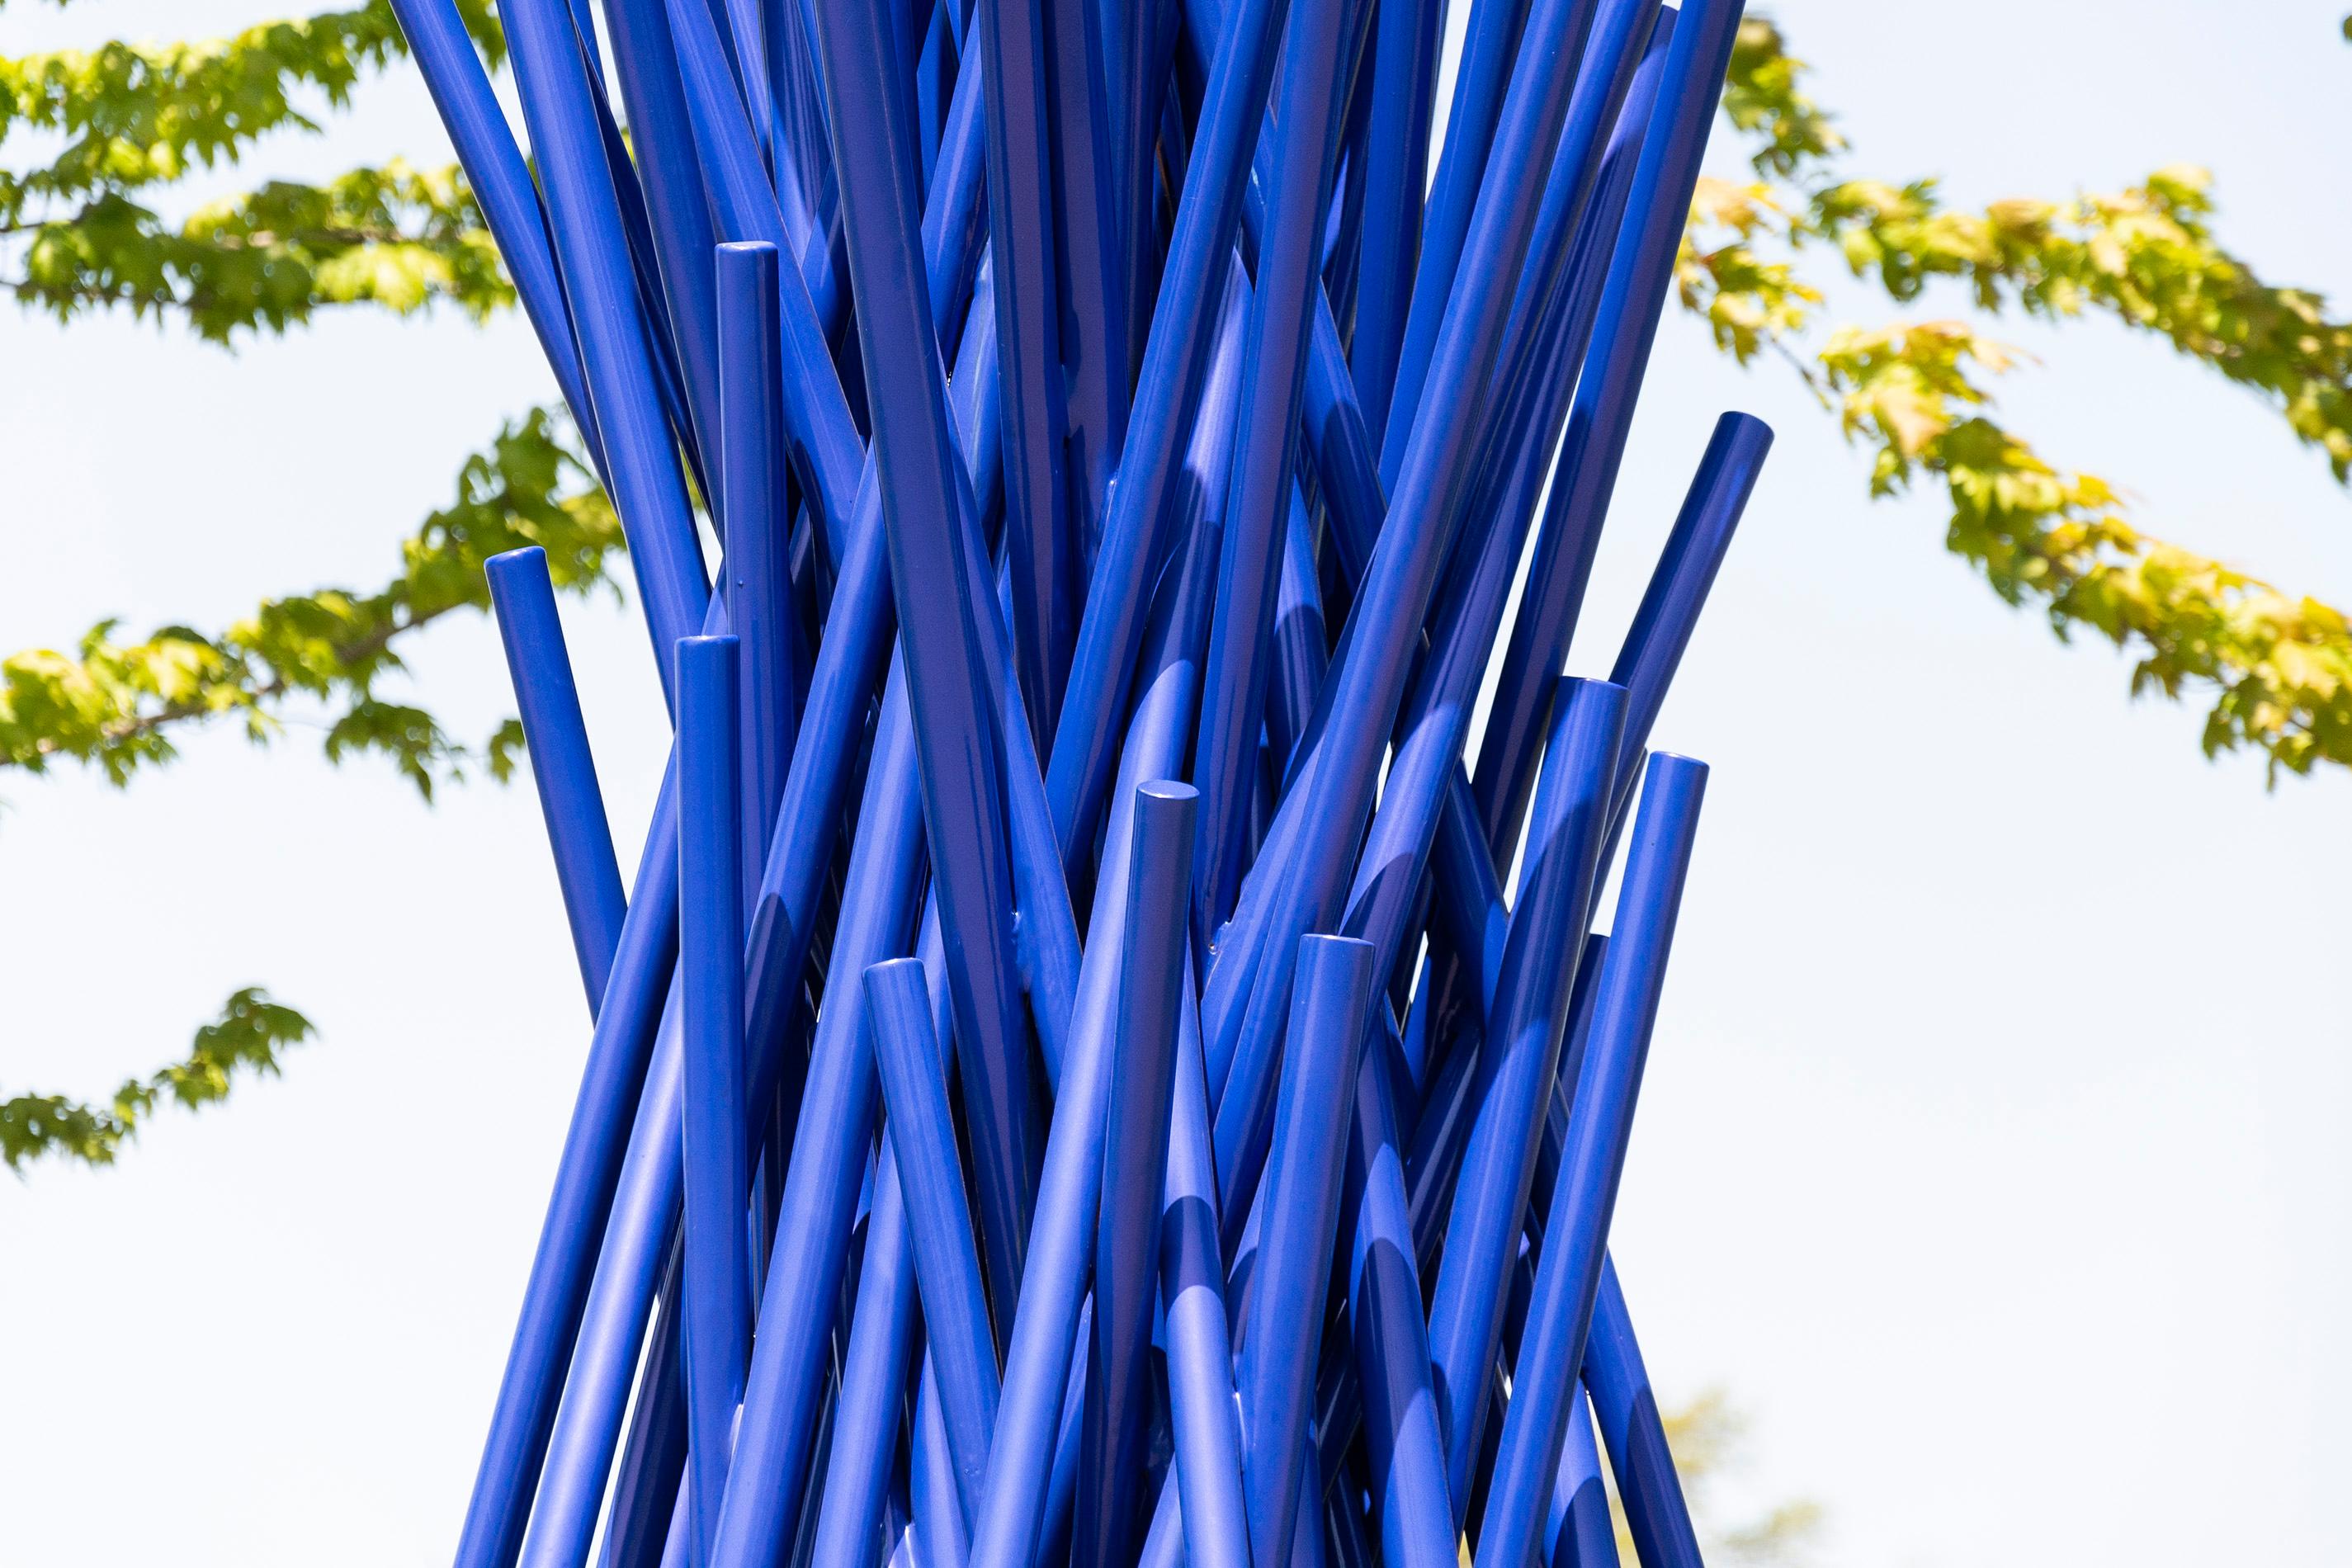 Entangled Rambling Blue – sich kreuzende Türme in Himmelblau (Blau), Abstract Sculpture, von Shayne Dark